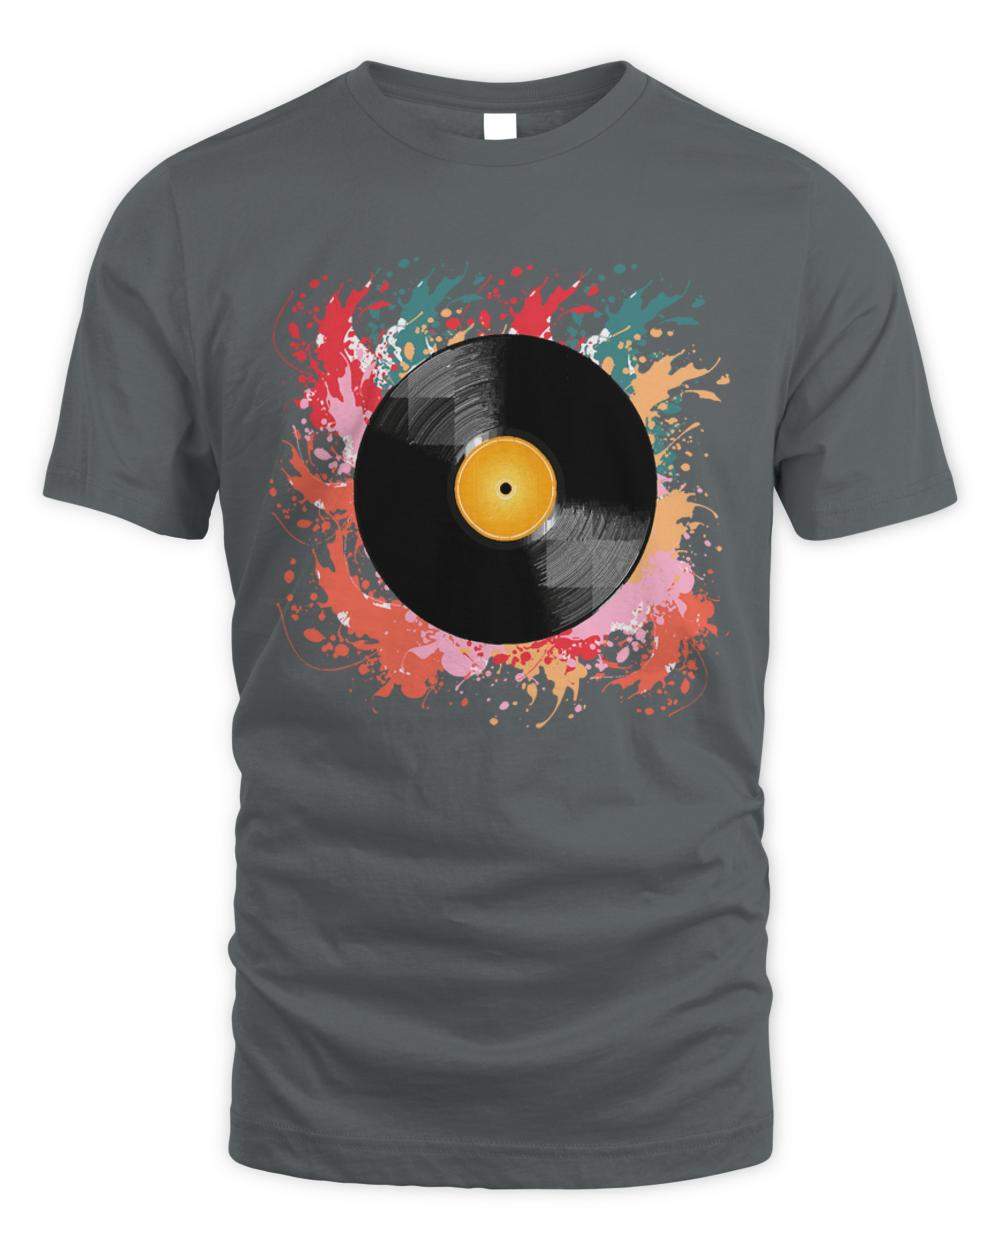 Vinyl Record Lover T-ShirtRetro Vinyl Records LP _ Vinyl Record Lover T-Shirt